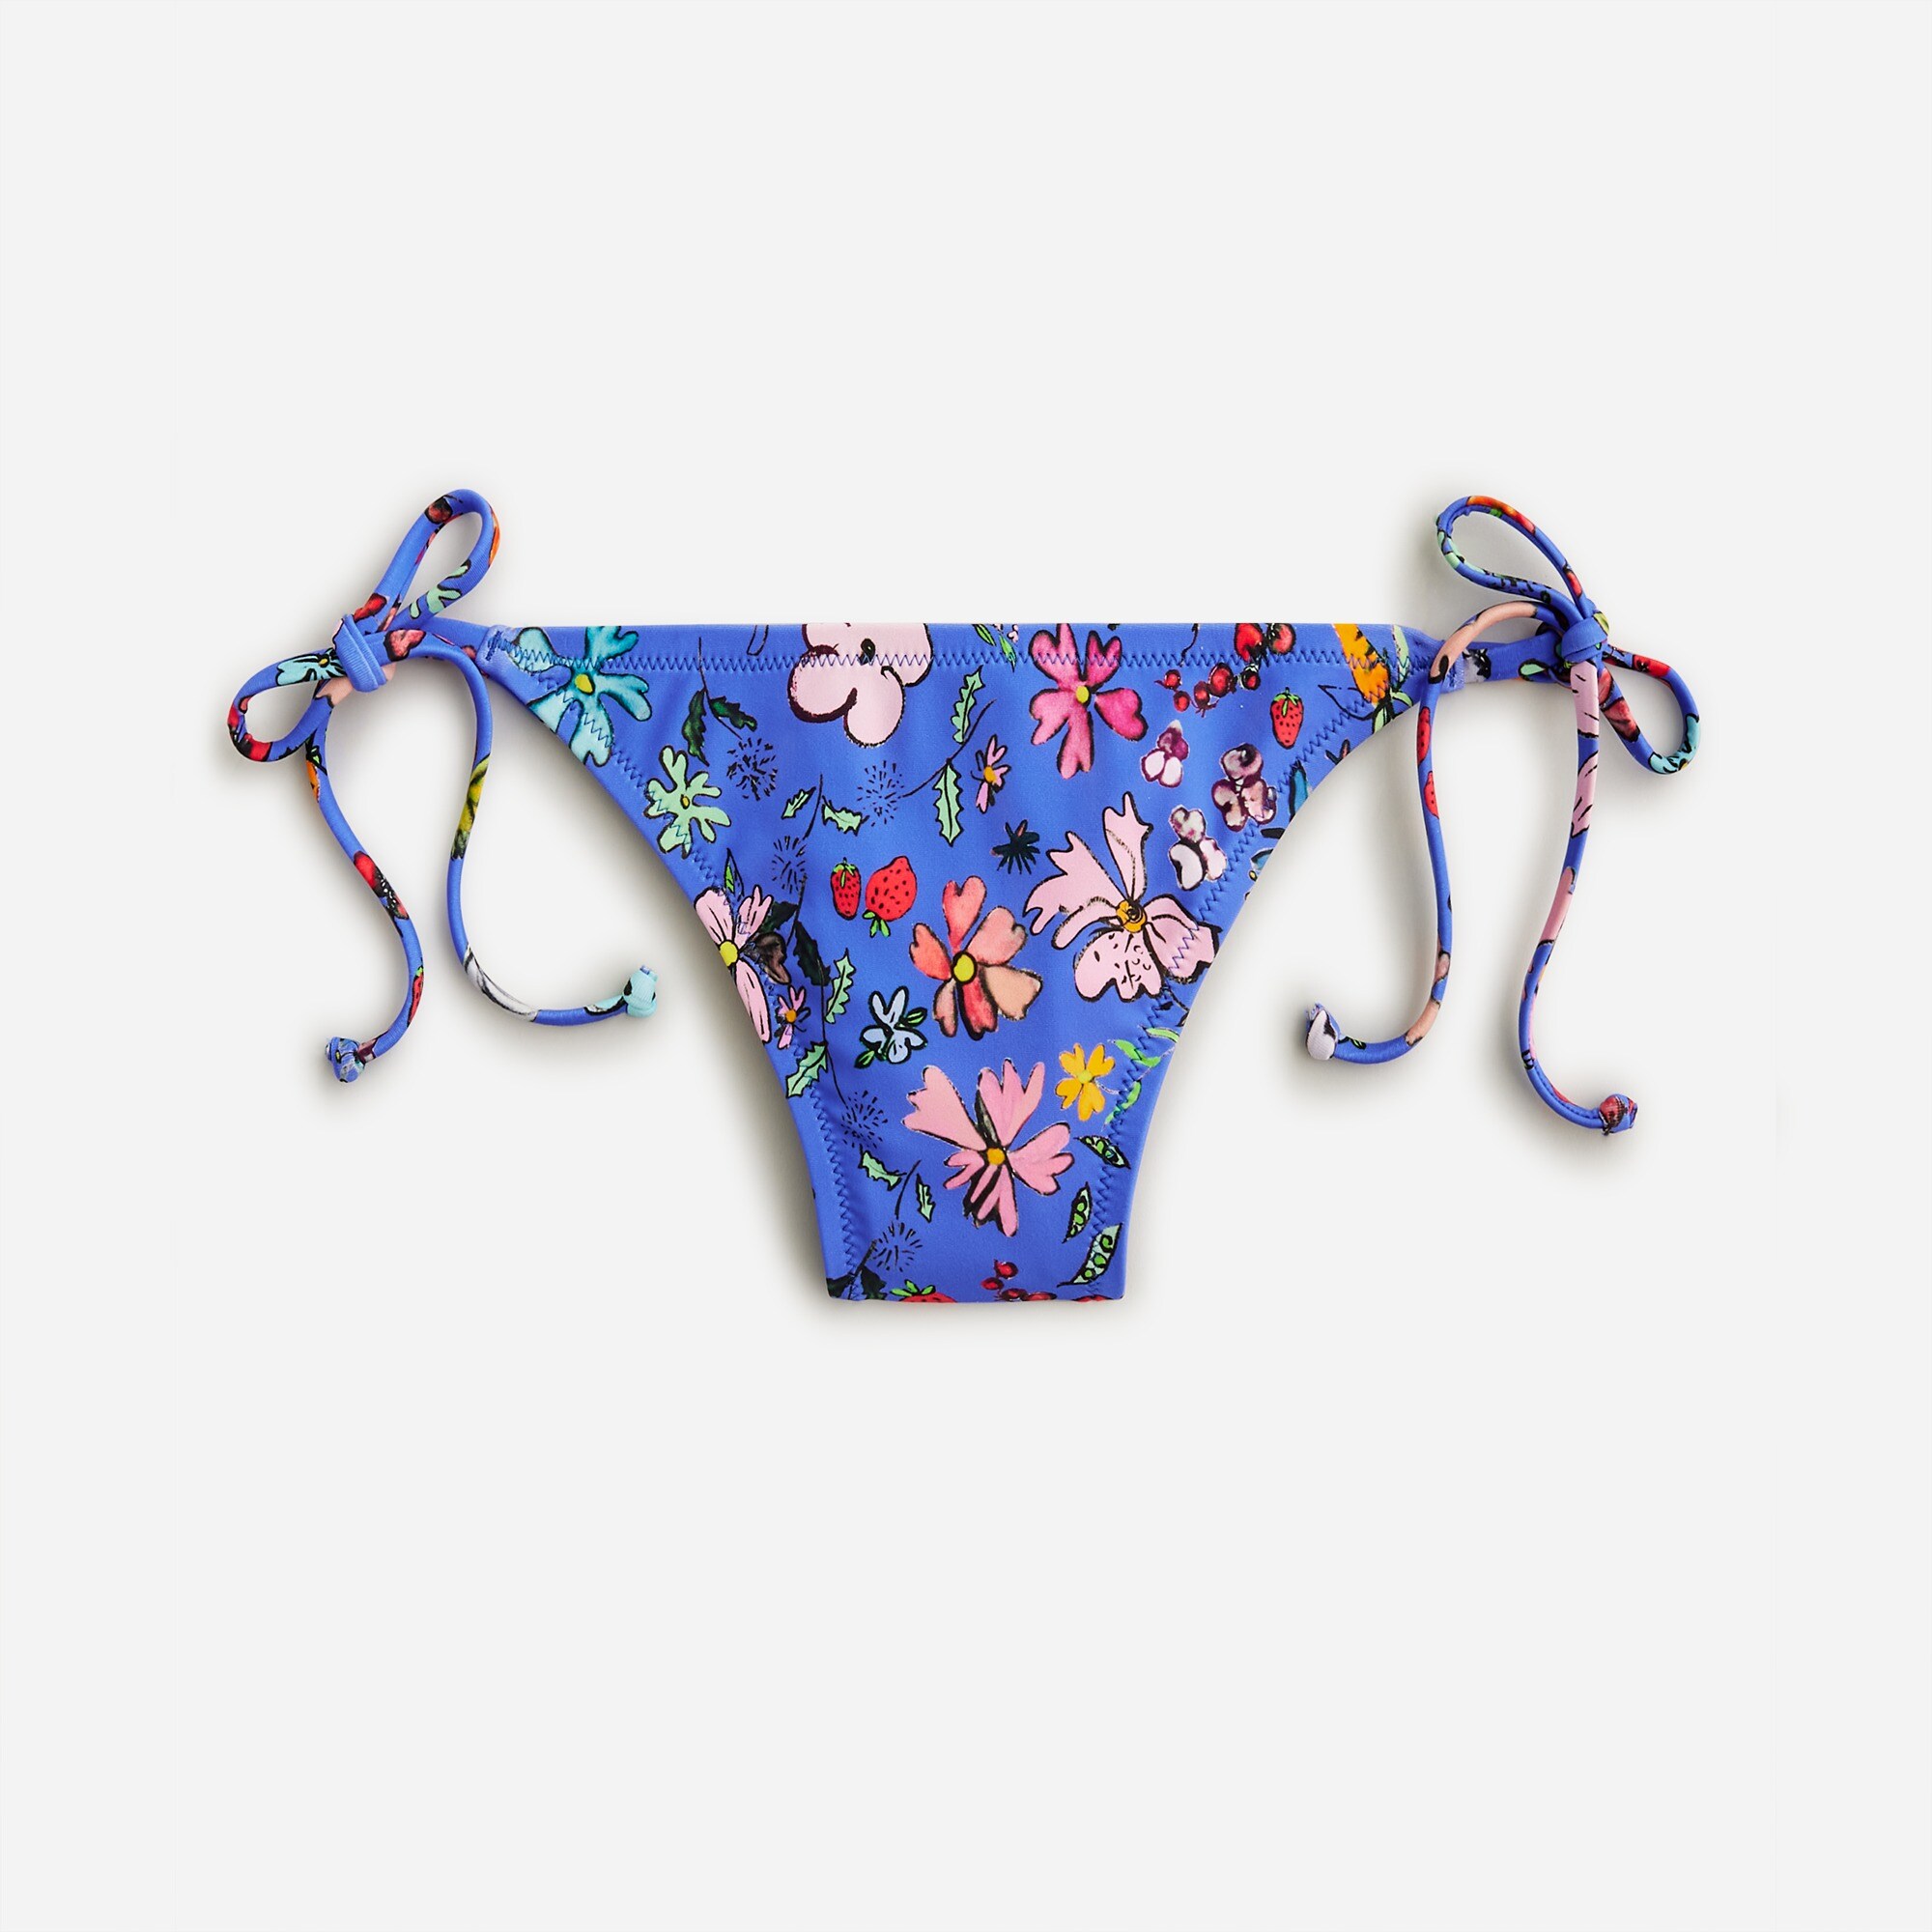  Dauphinette X J.Crew string hipster full-coverage bikini bottom in cornucopia floral